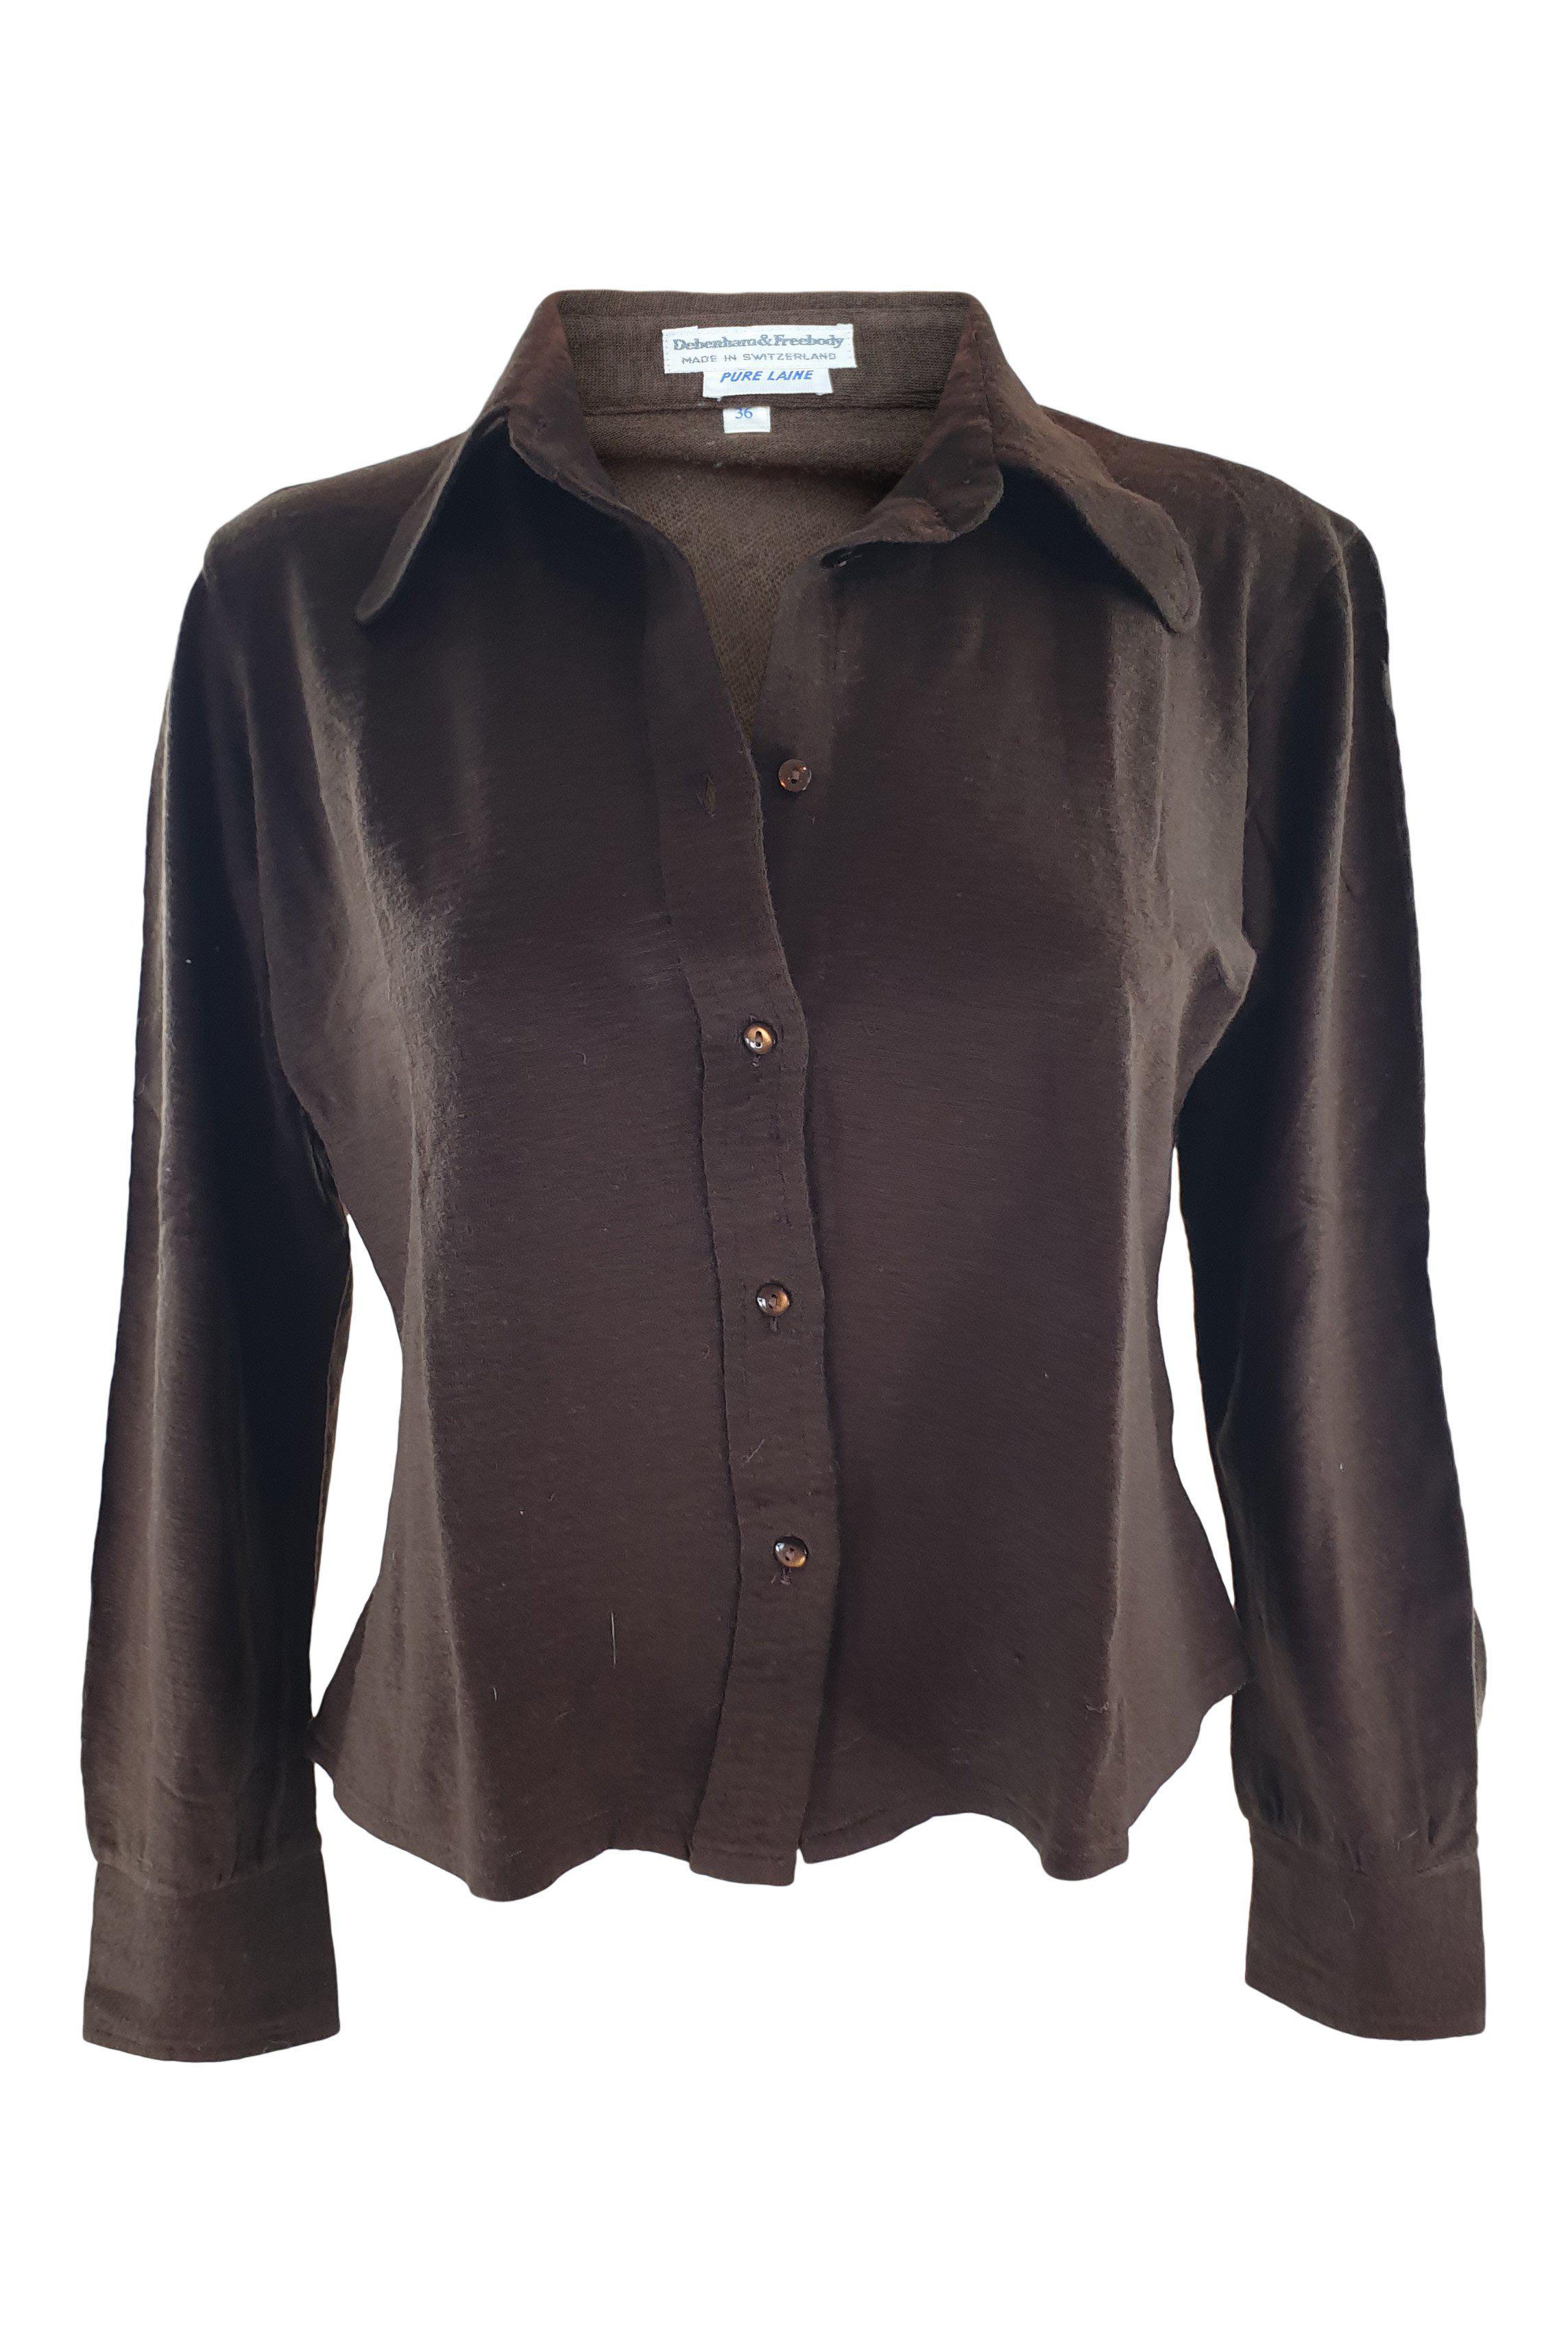 DEBENHAM AND FREEBODY Vintage 100% Wool Brown Button Front Shirt (36)-Debenham & Freebody-The Freperie